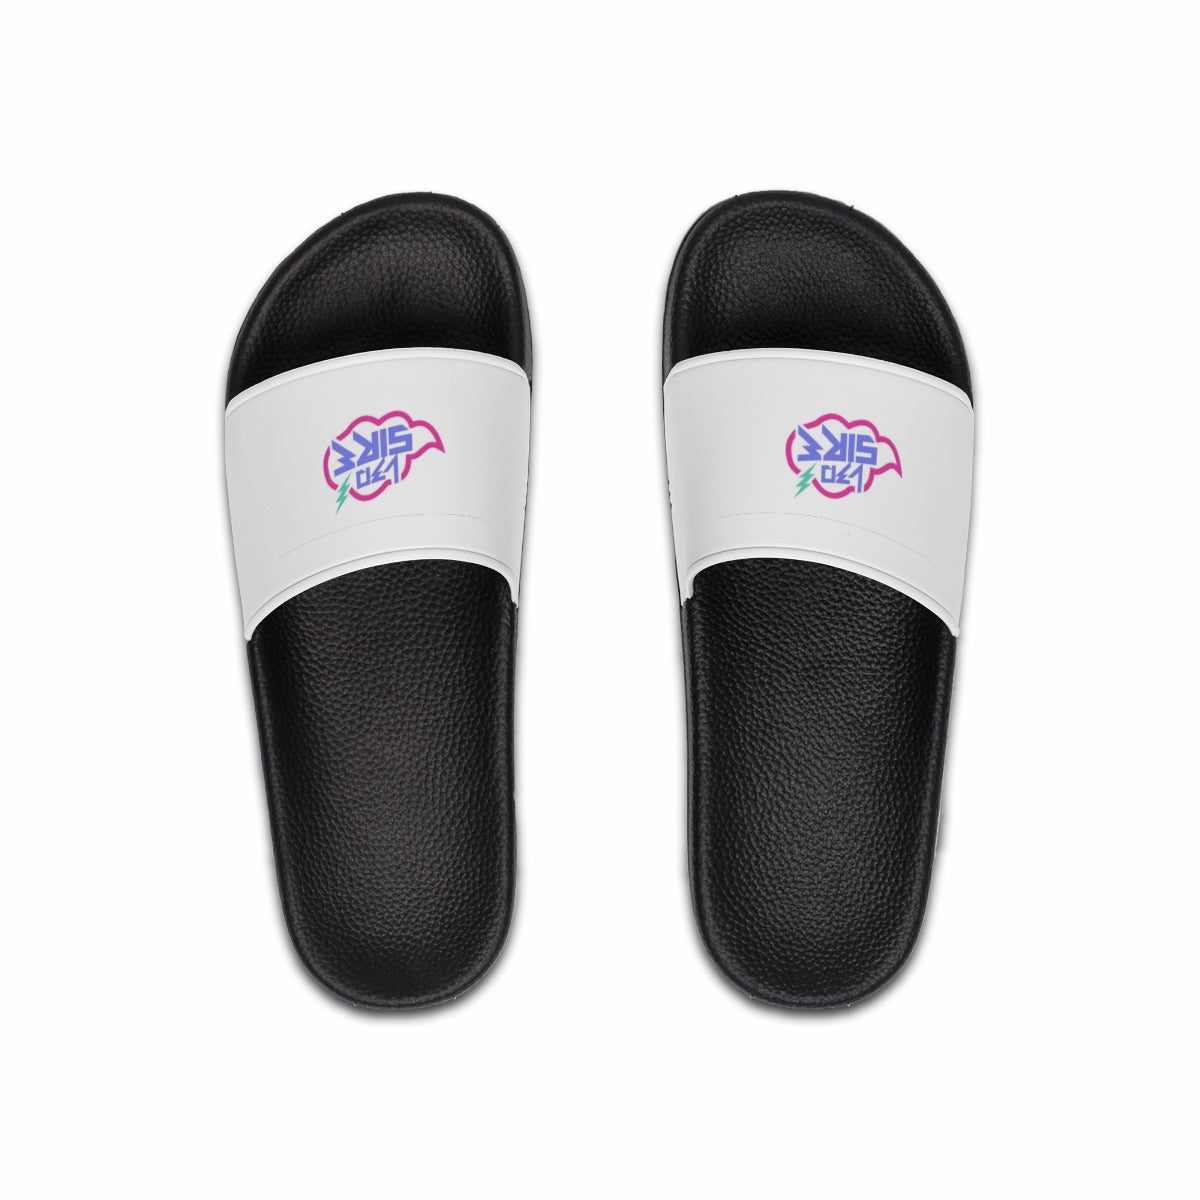 Sire Slide Sandals